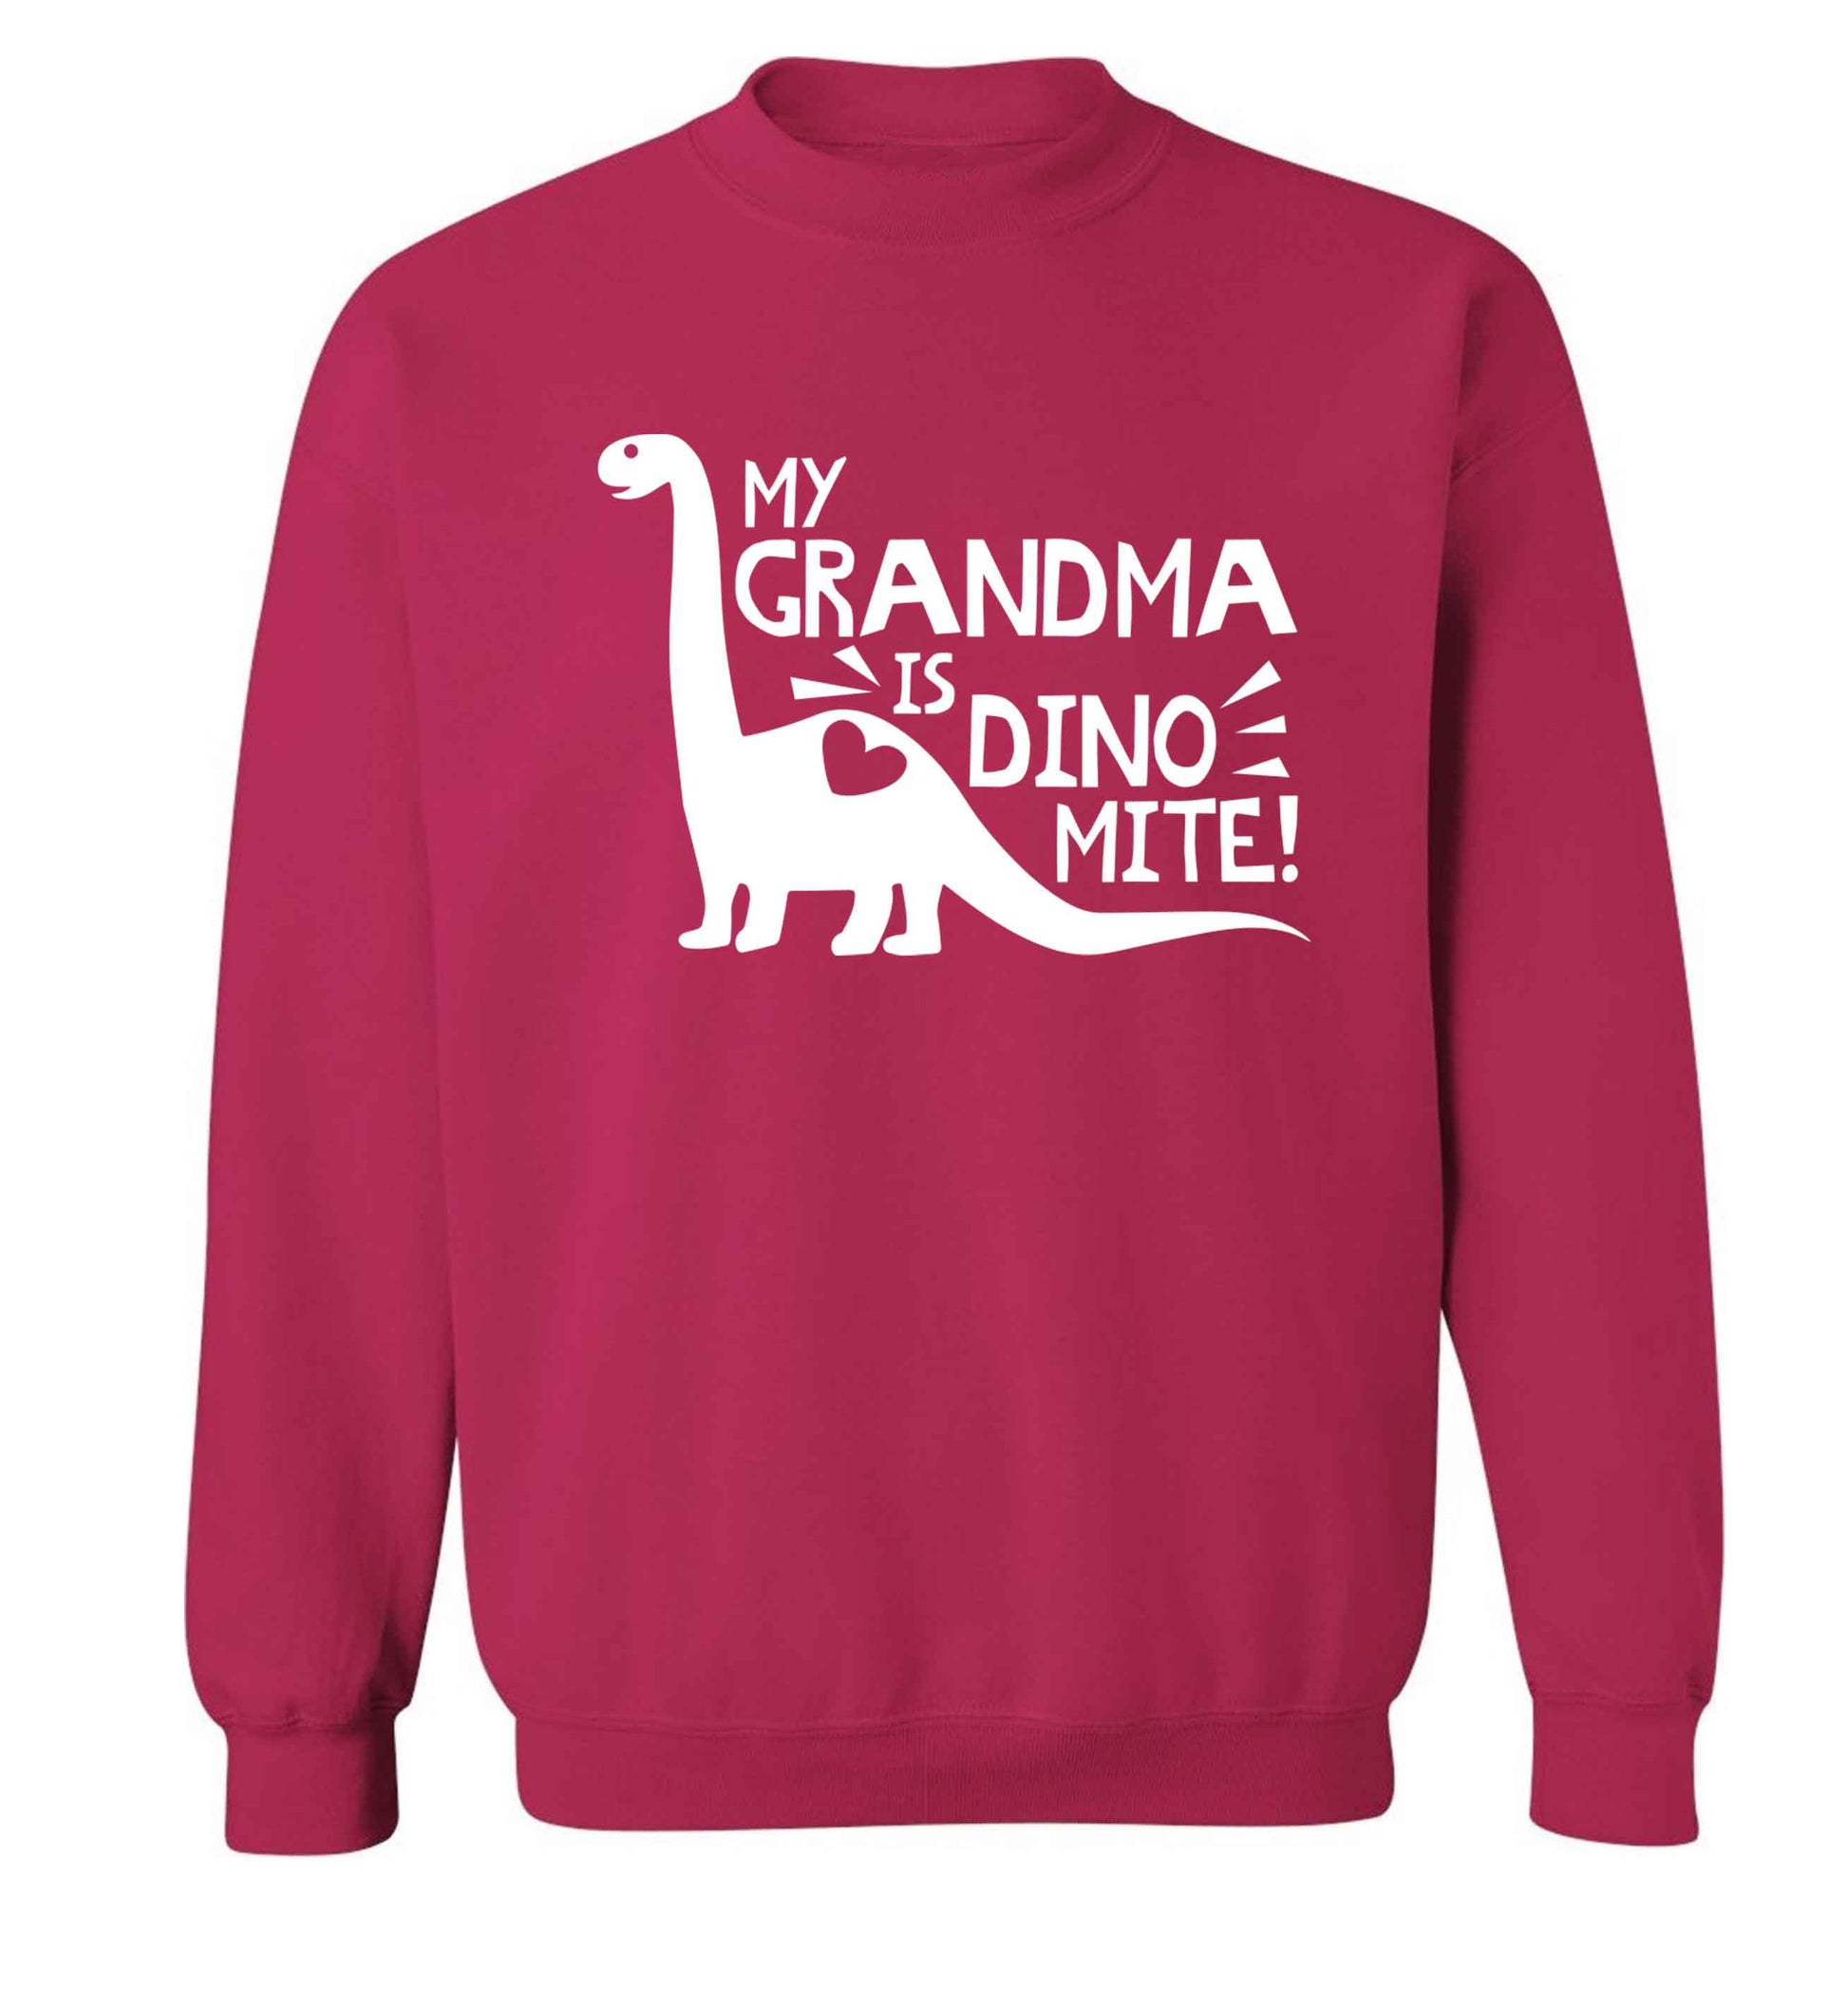 My grandma is dinomite! Adult's unisex pink Sweater 2XL